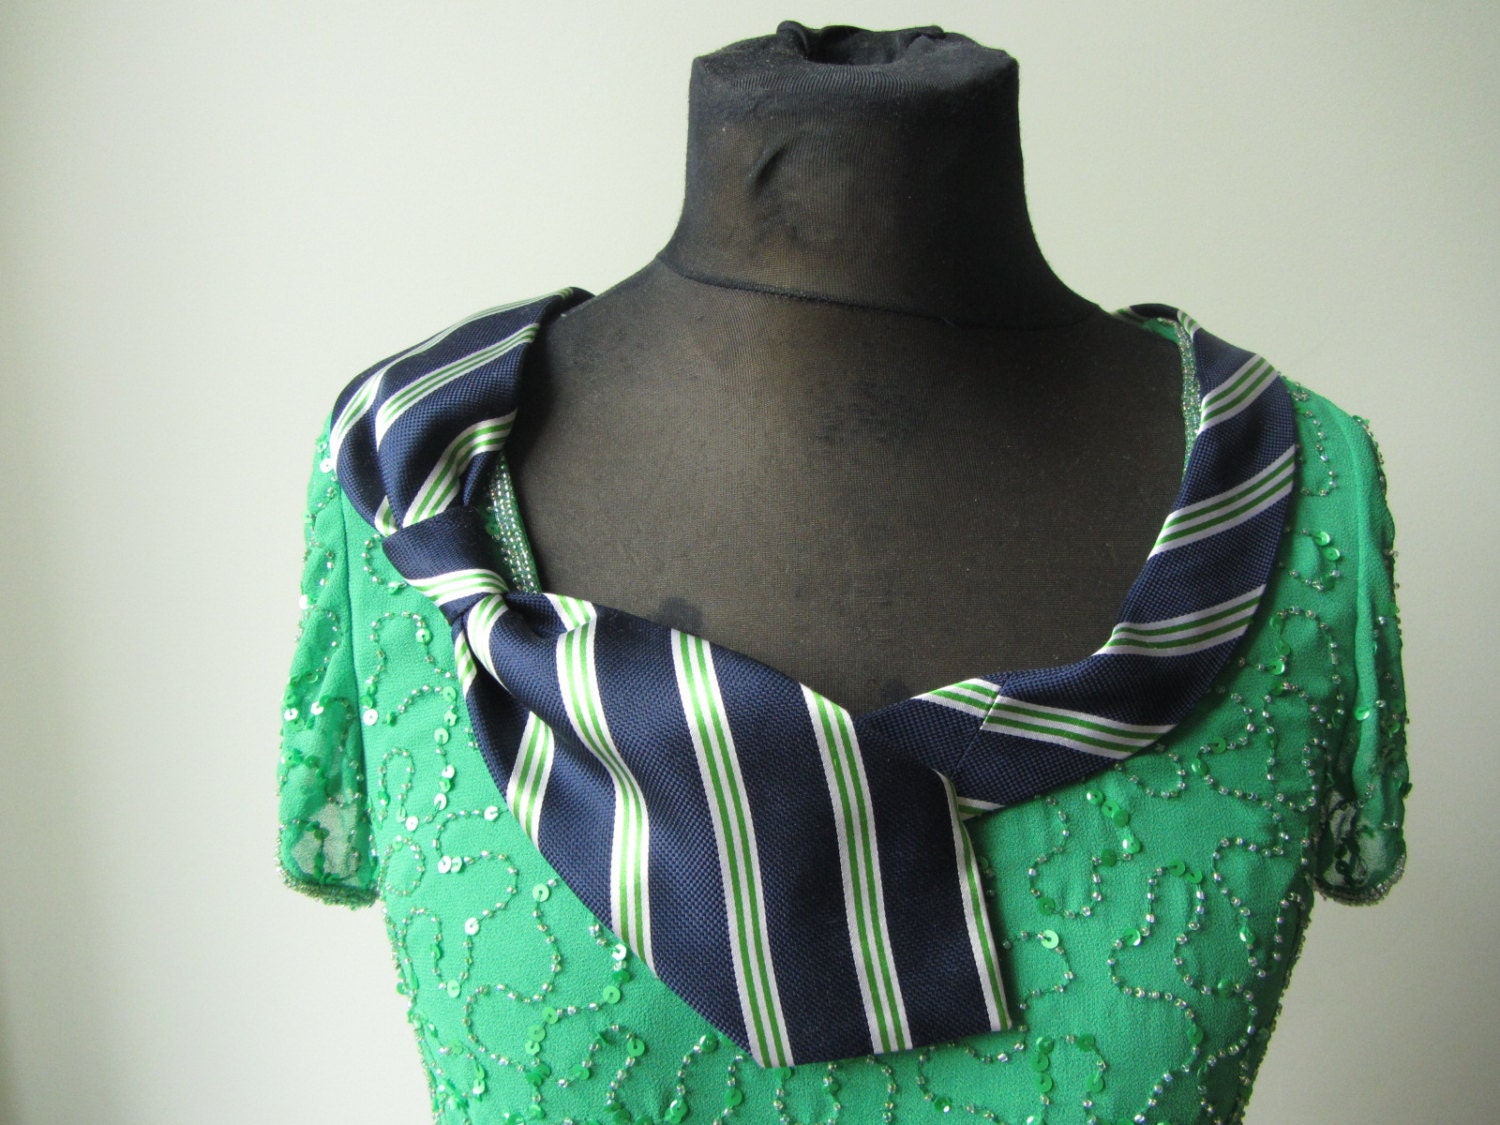 Green Sequin Top detailed with Repurposed Necktie Funky